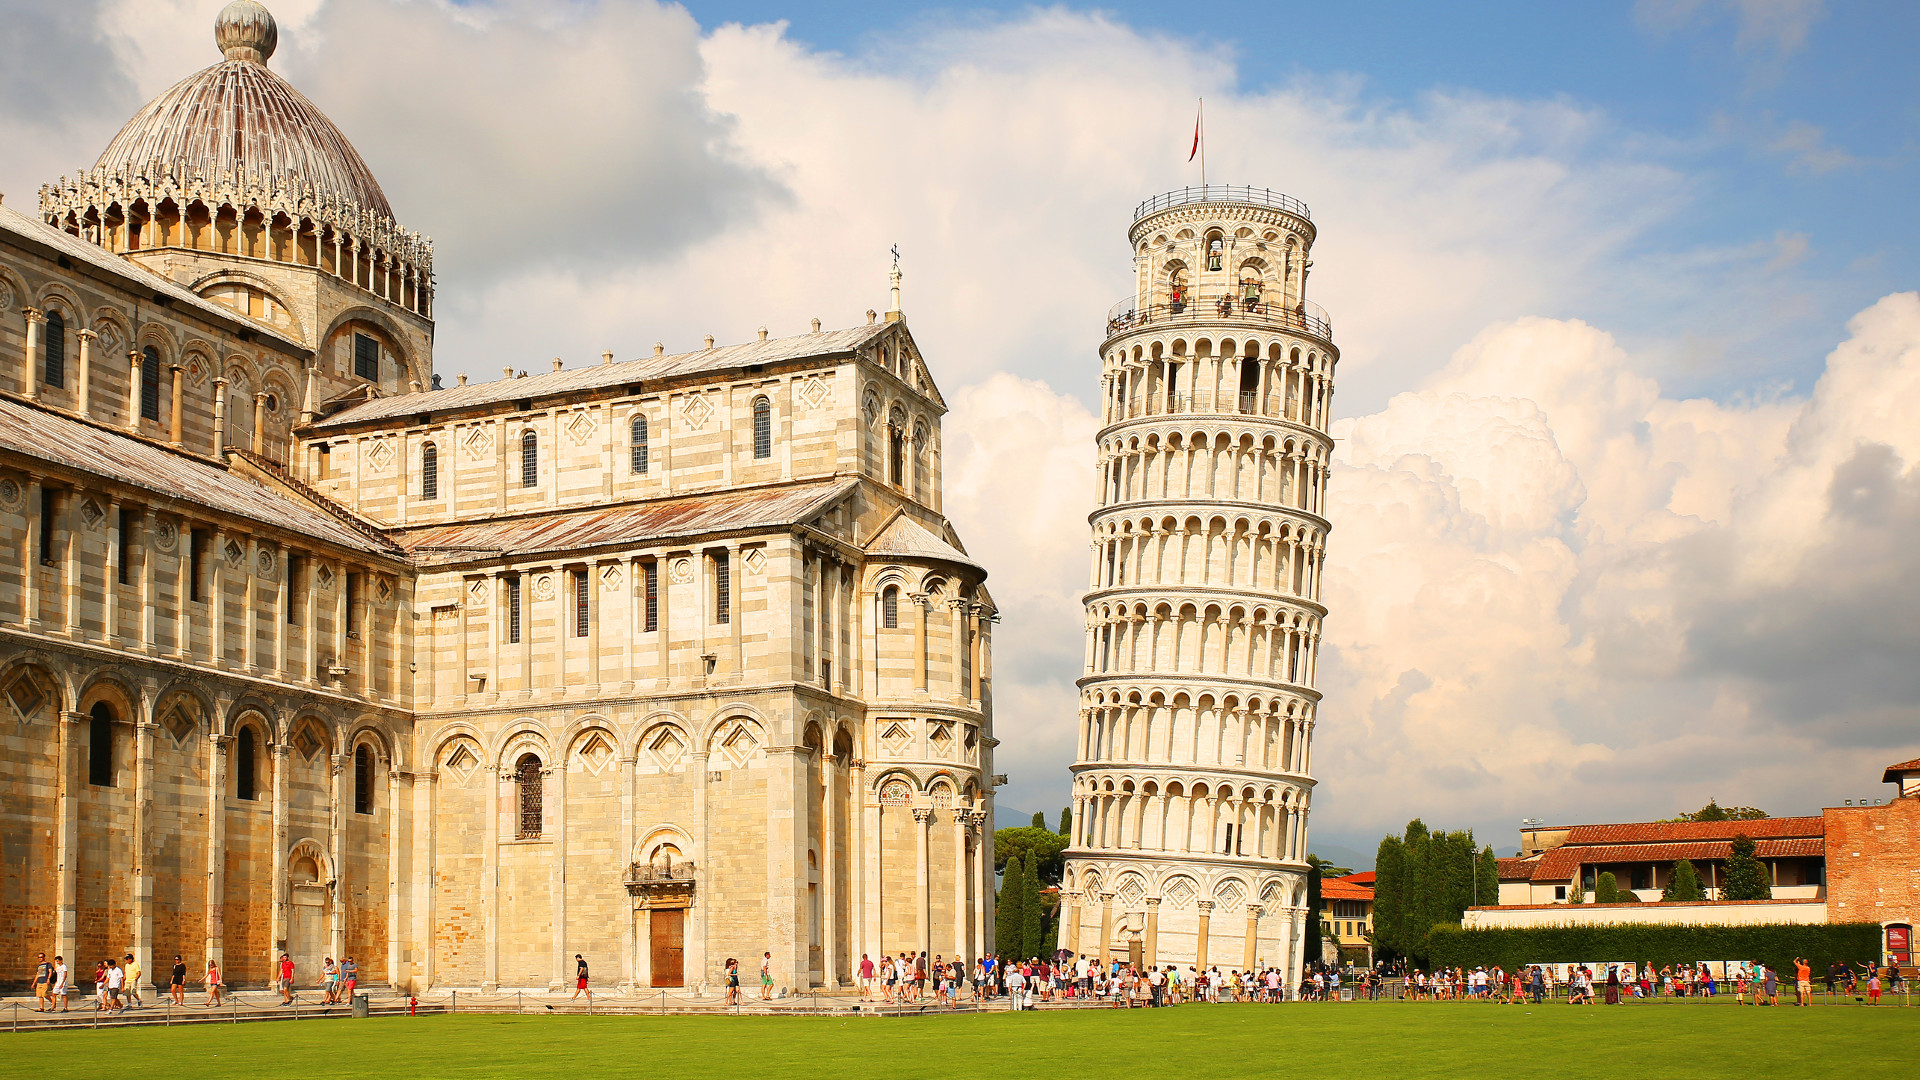 Italy, Pisa, Leaning Tower of Pisa